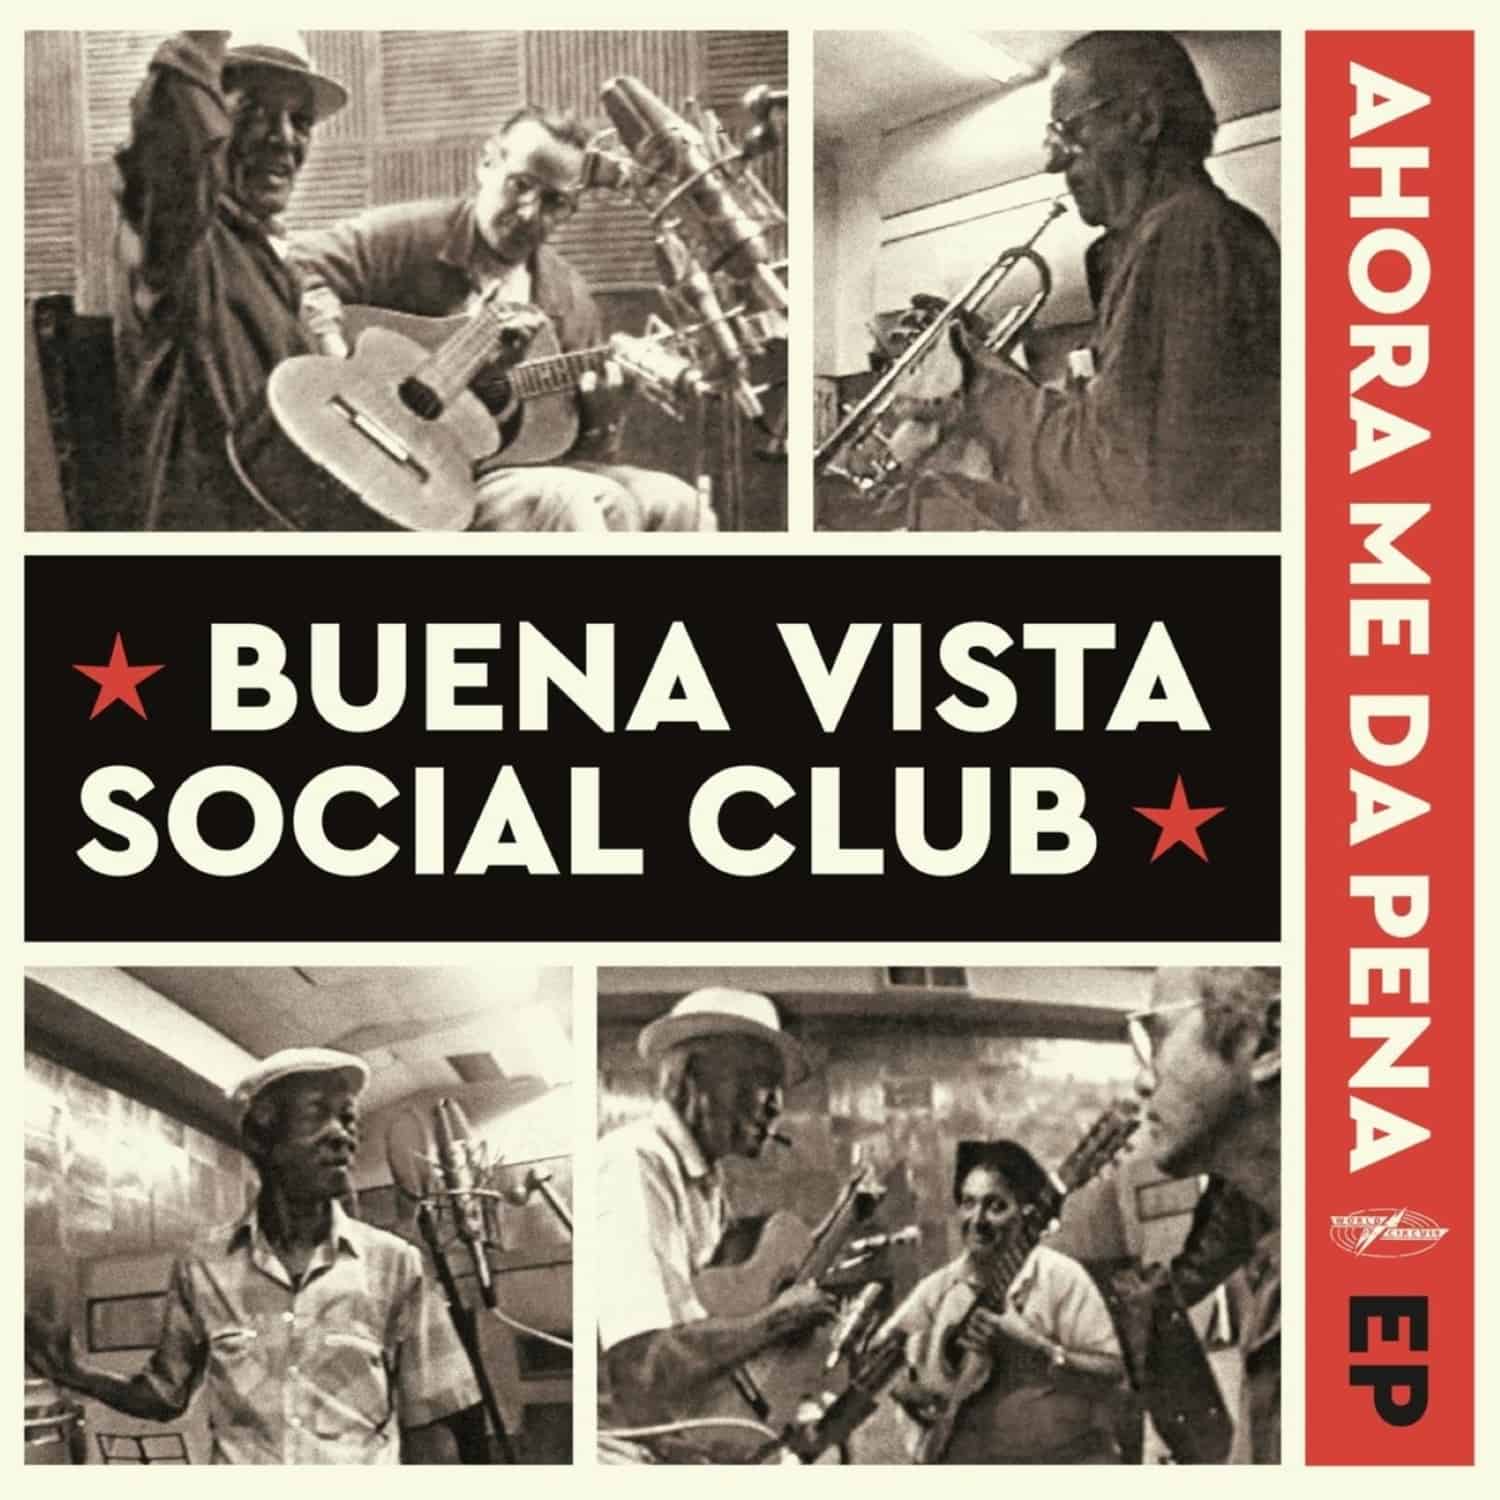 Buena Vista Social Club - AHORA ME DA PENA EP